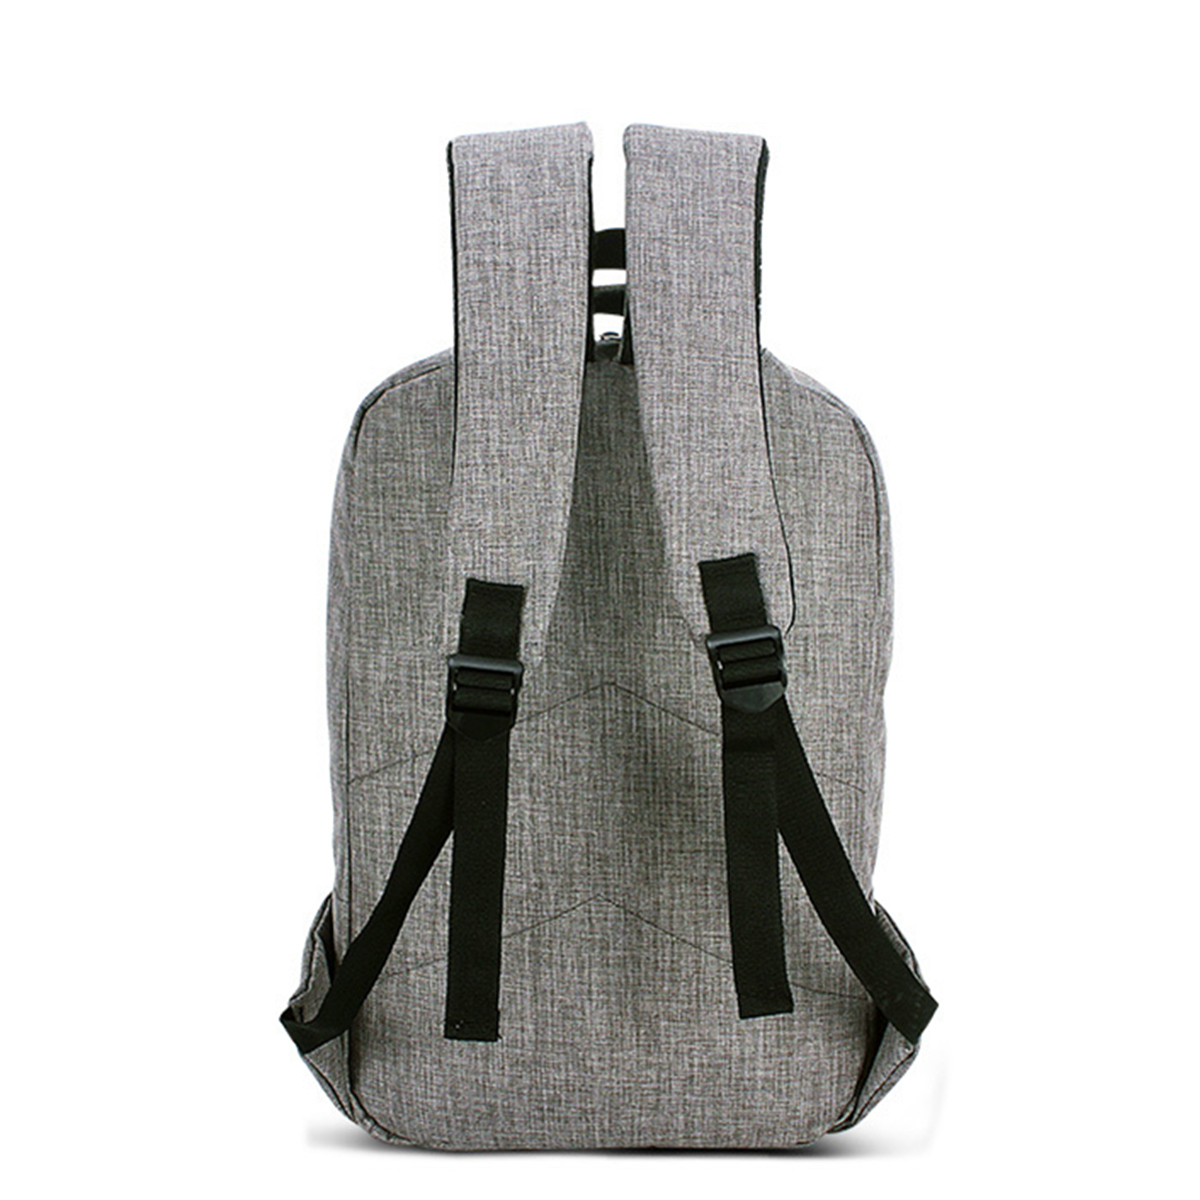 IPReereg-156inch-Men-Laptop-Canvas-Backpack-School-Business-Travel-Shoulder-Bag-Rucksack-1193578-5